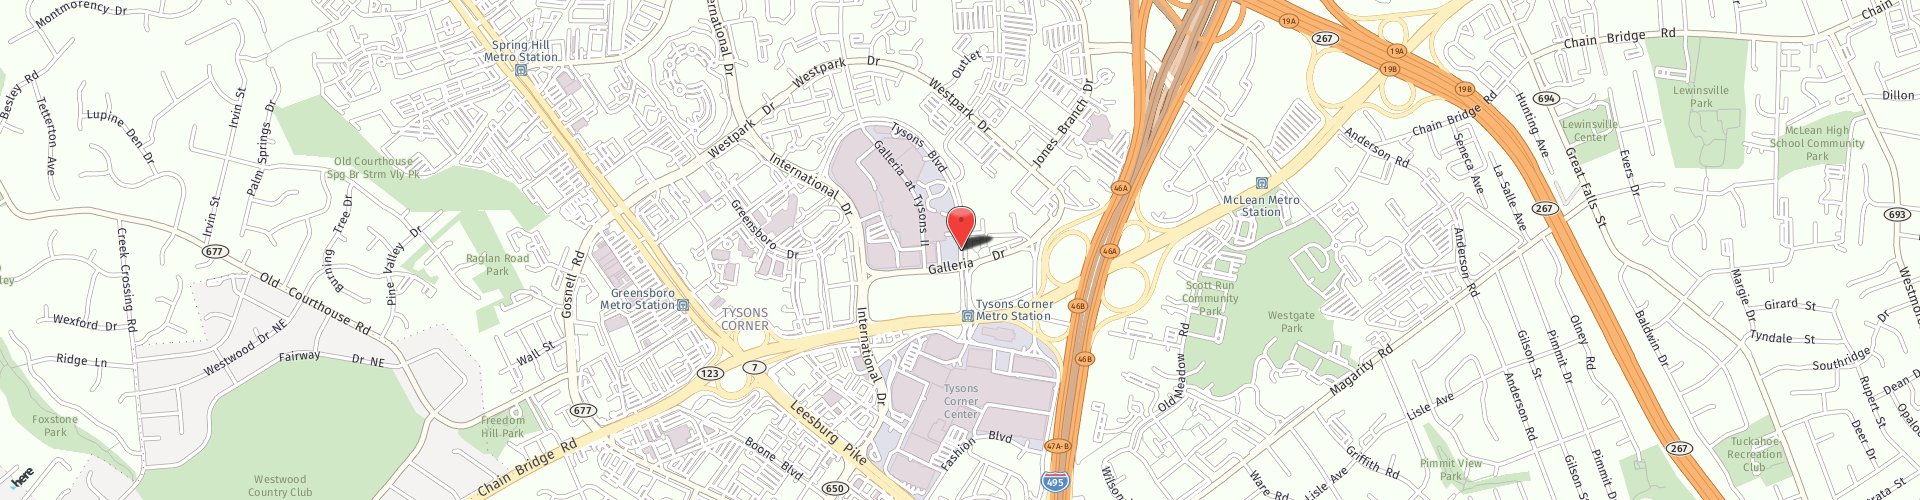 Location Map: 1800 Tysons Blvd McLean, VA 22102